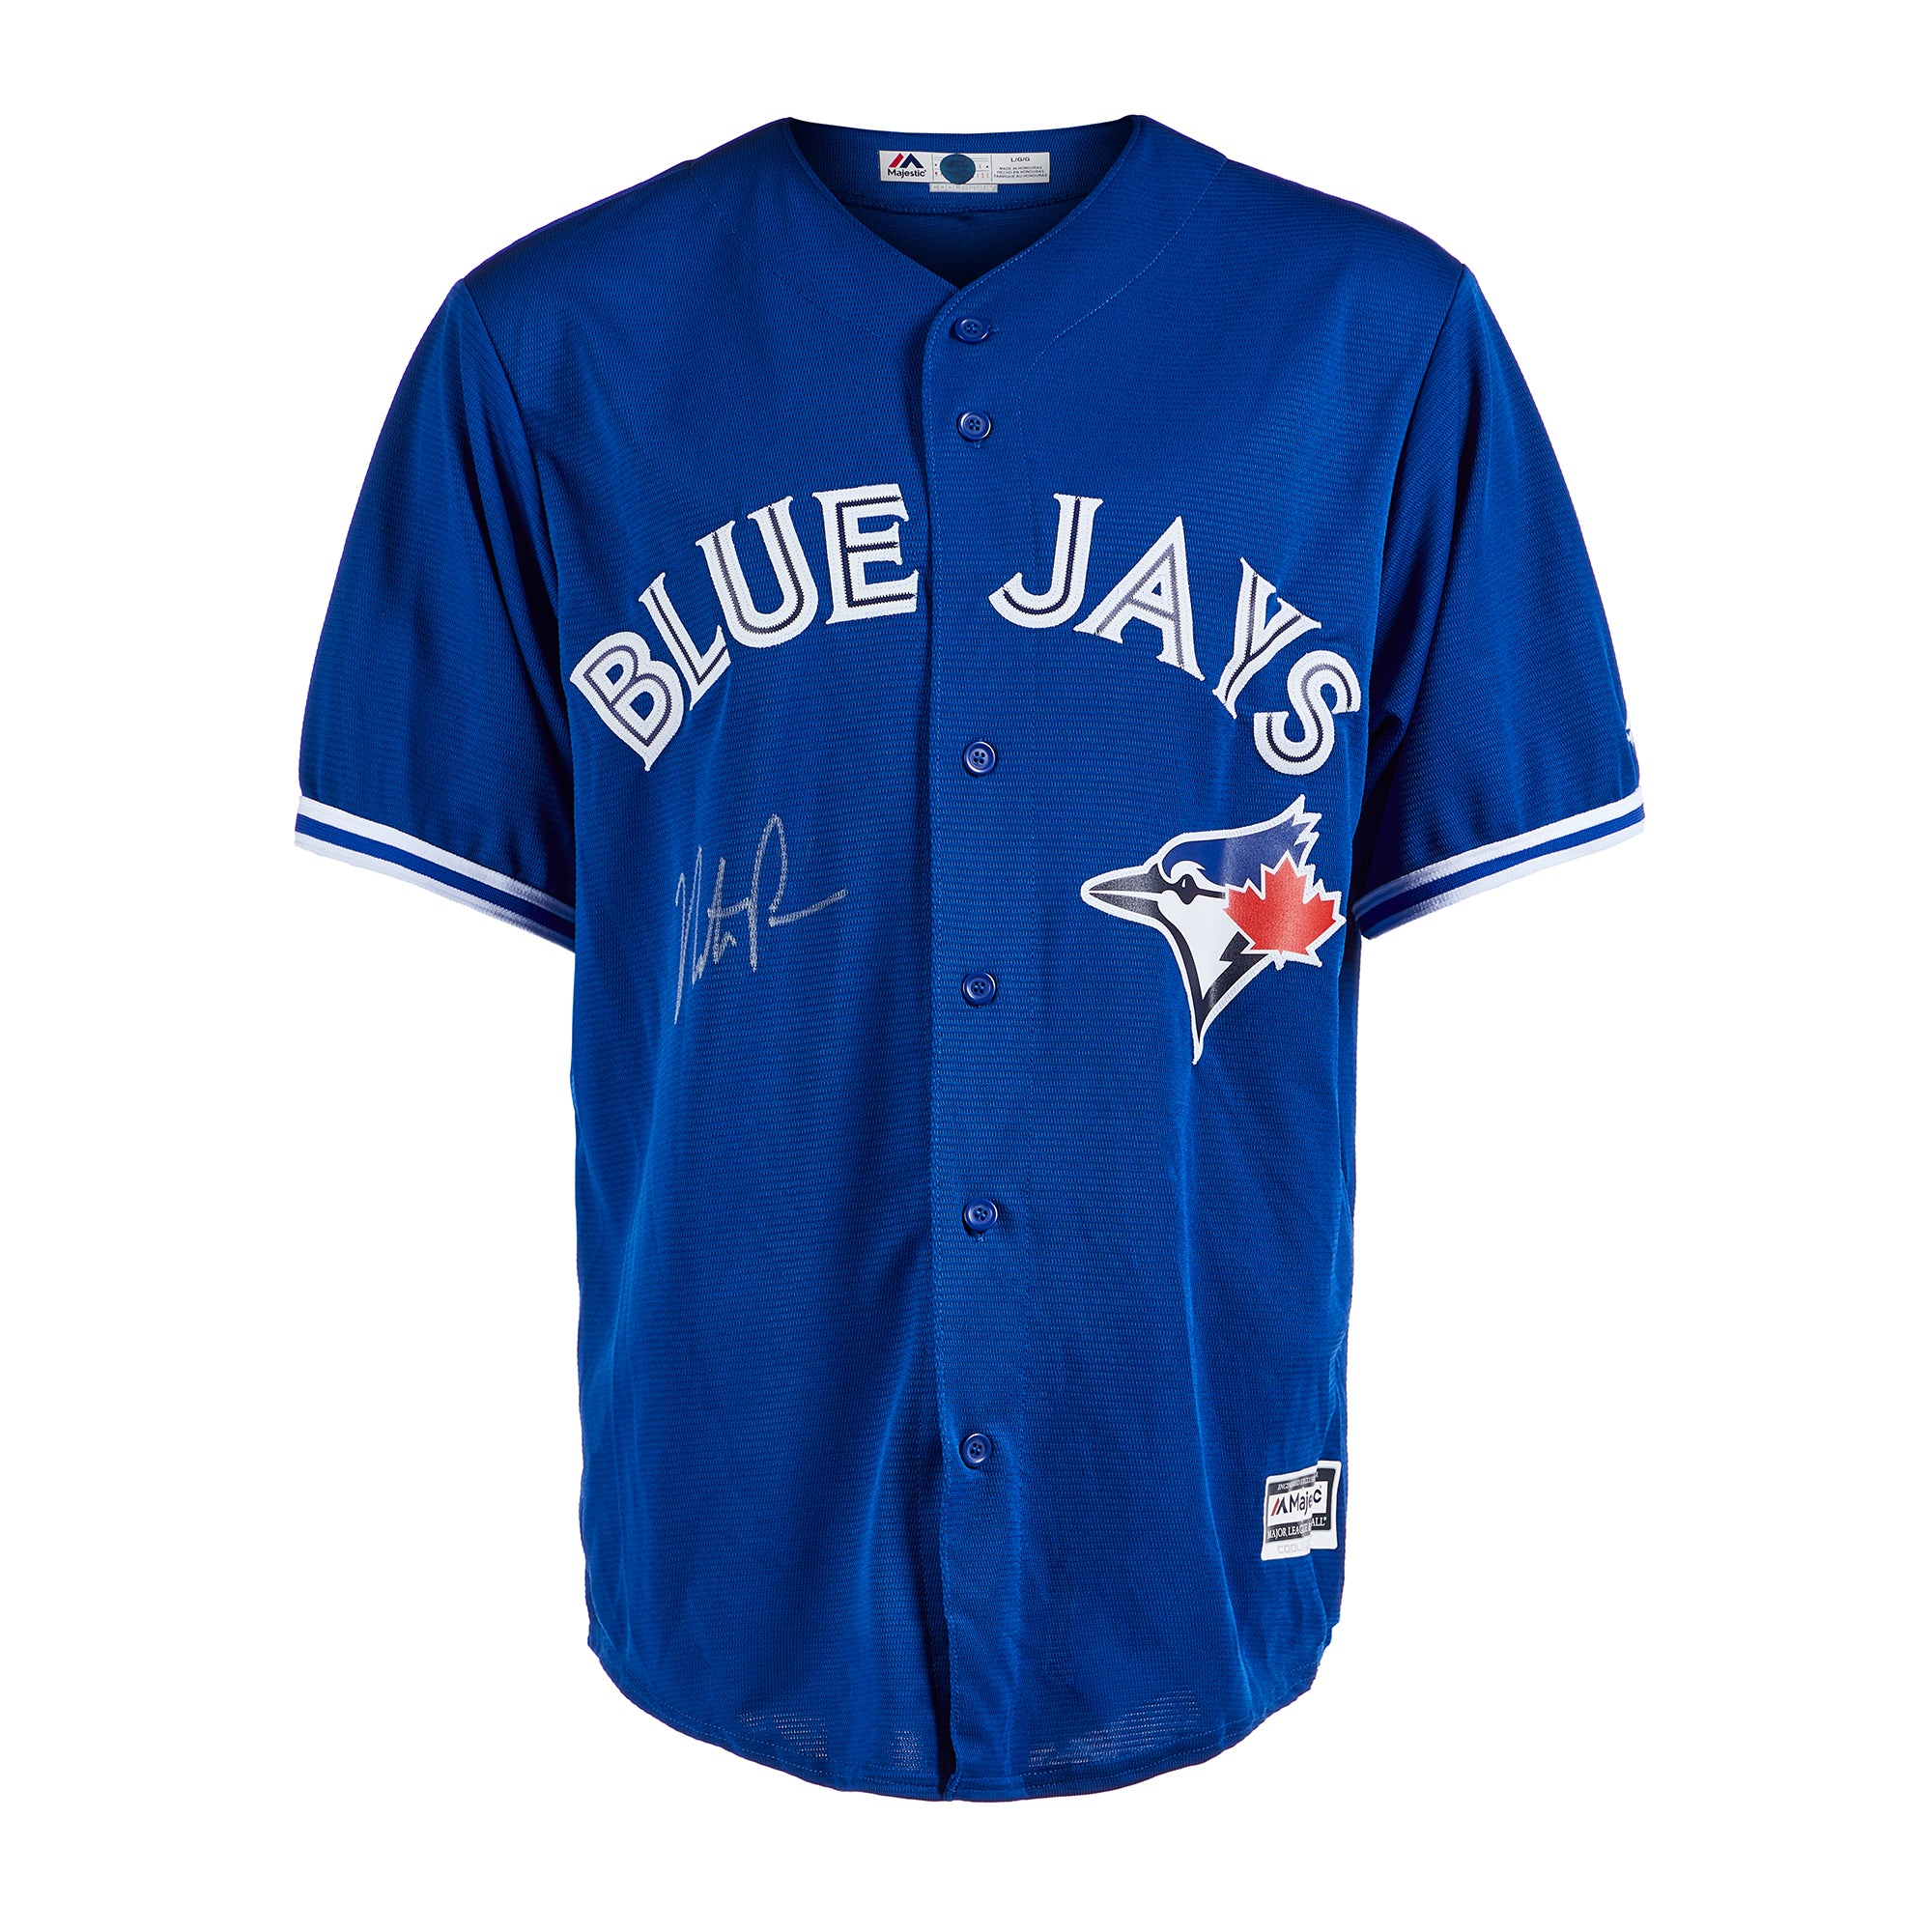 Pat Borders (BLUE JAYS) Signed White Custom Baseball Jersey w/92